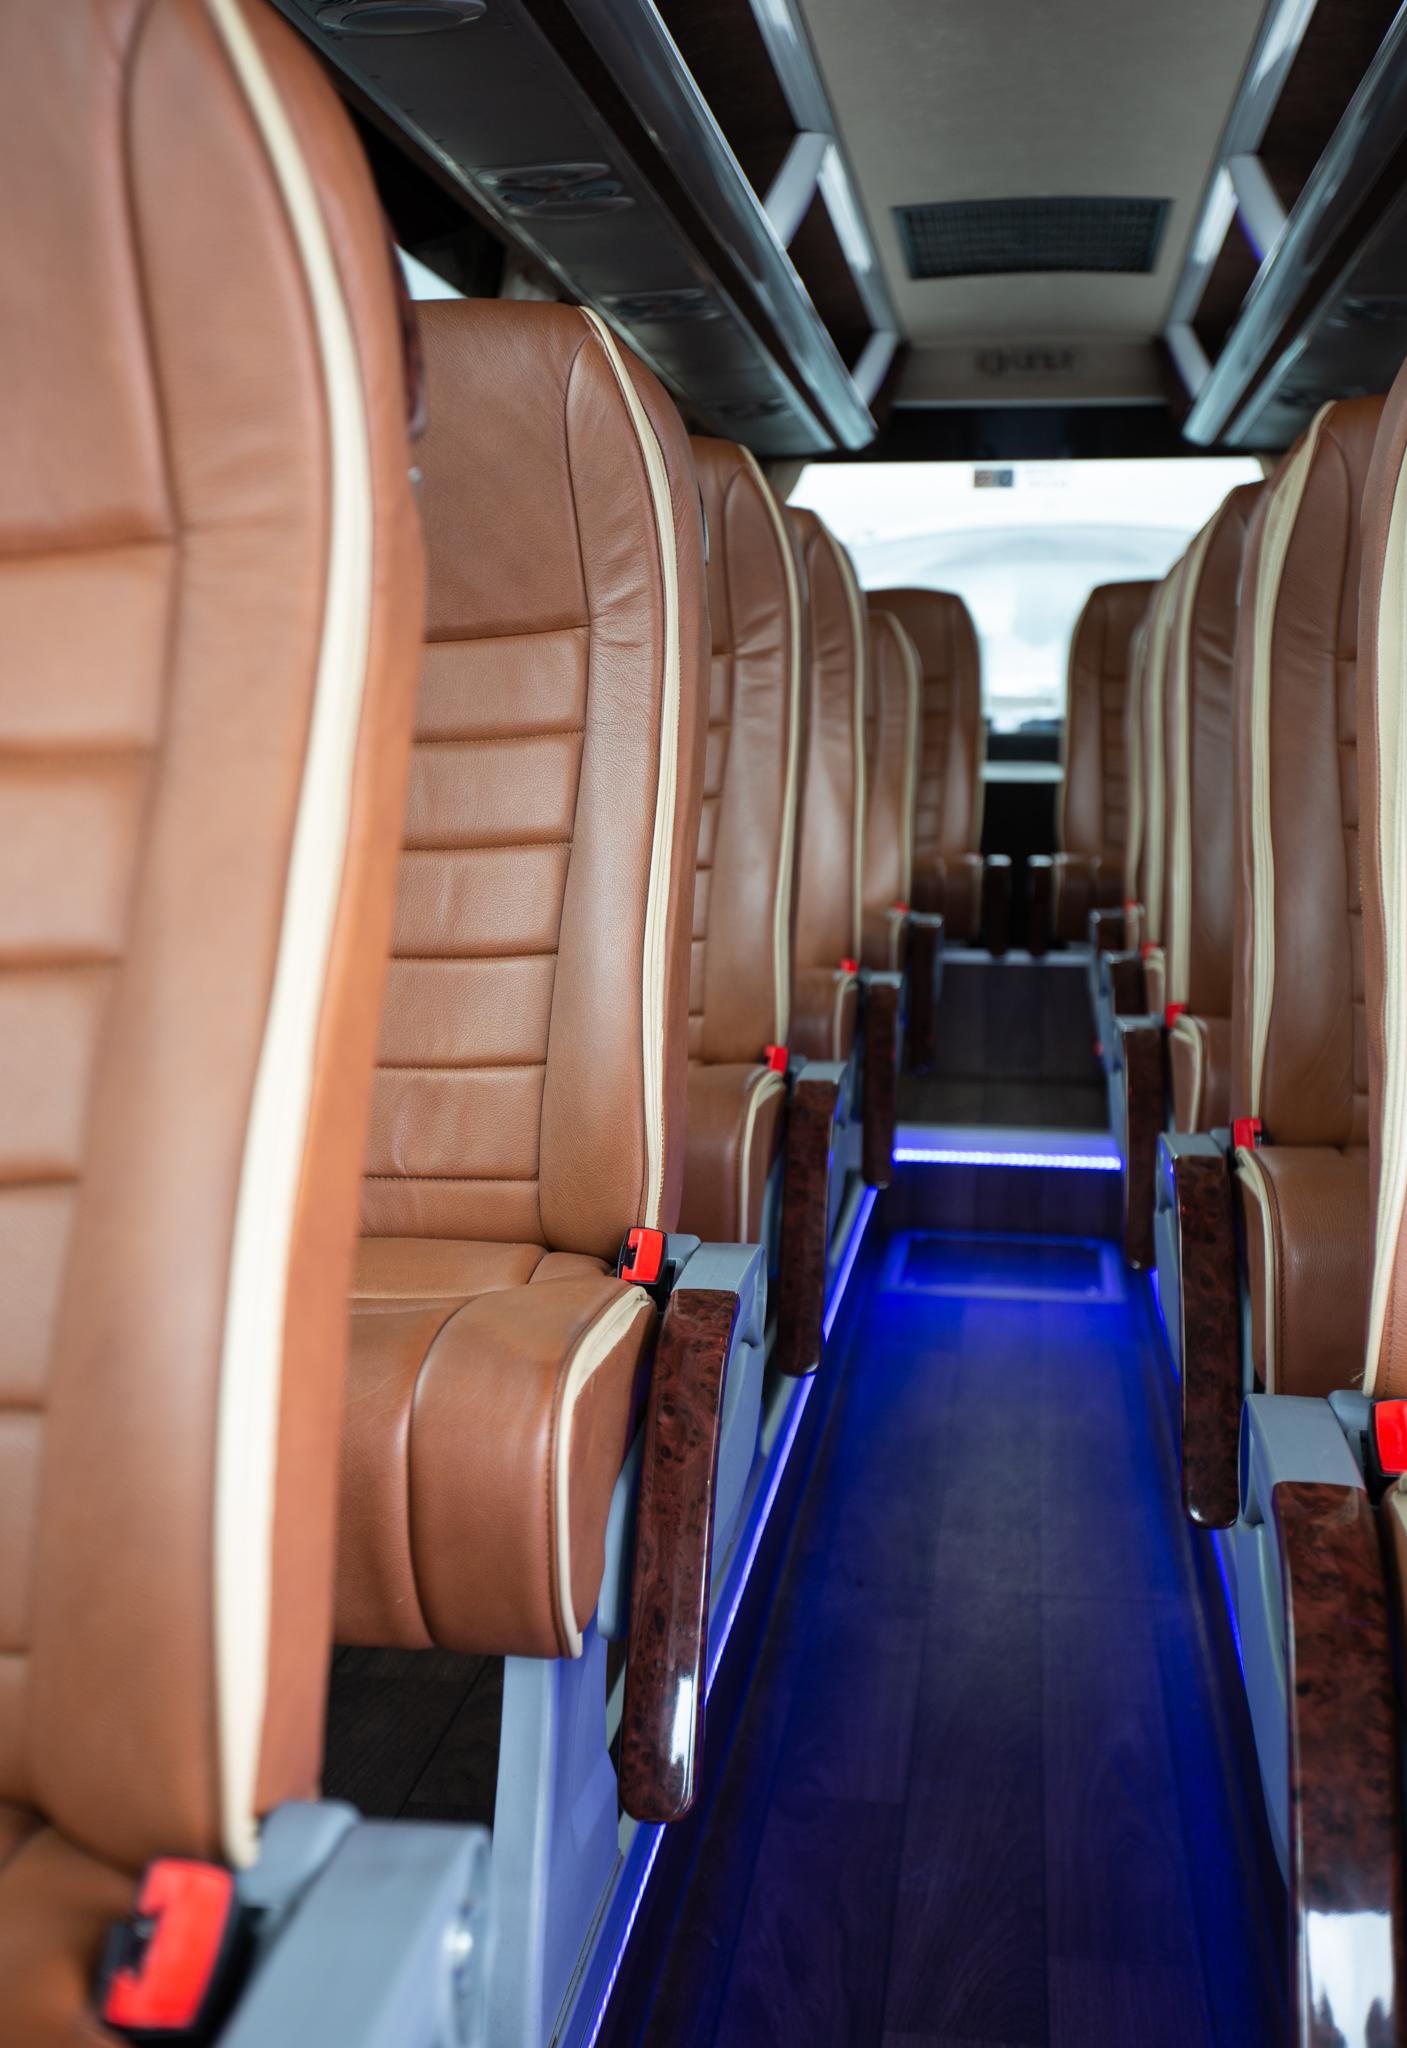 Luxury bus hire 24 seater bus interior seats